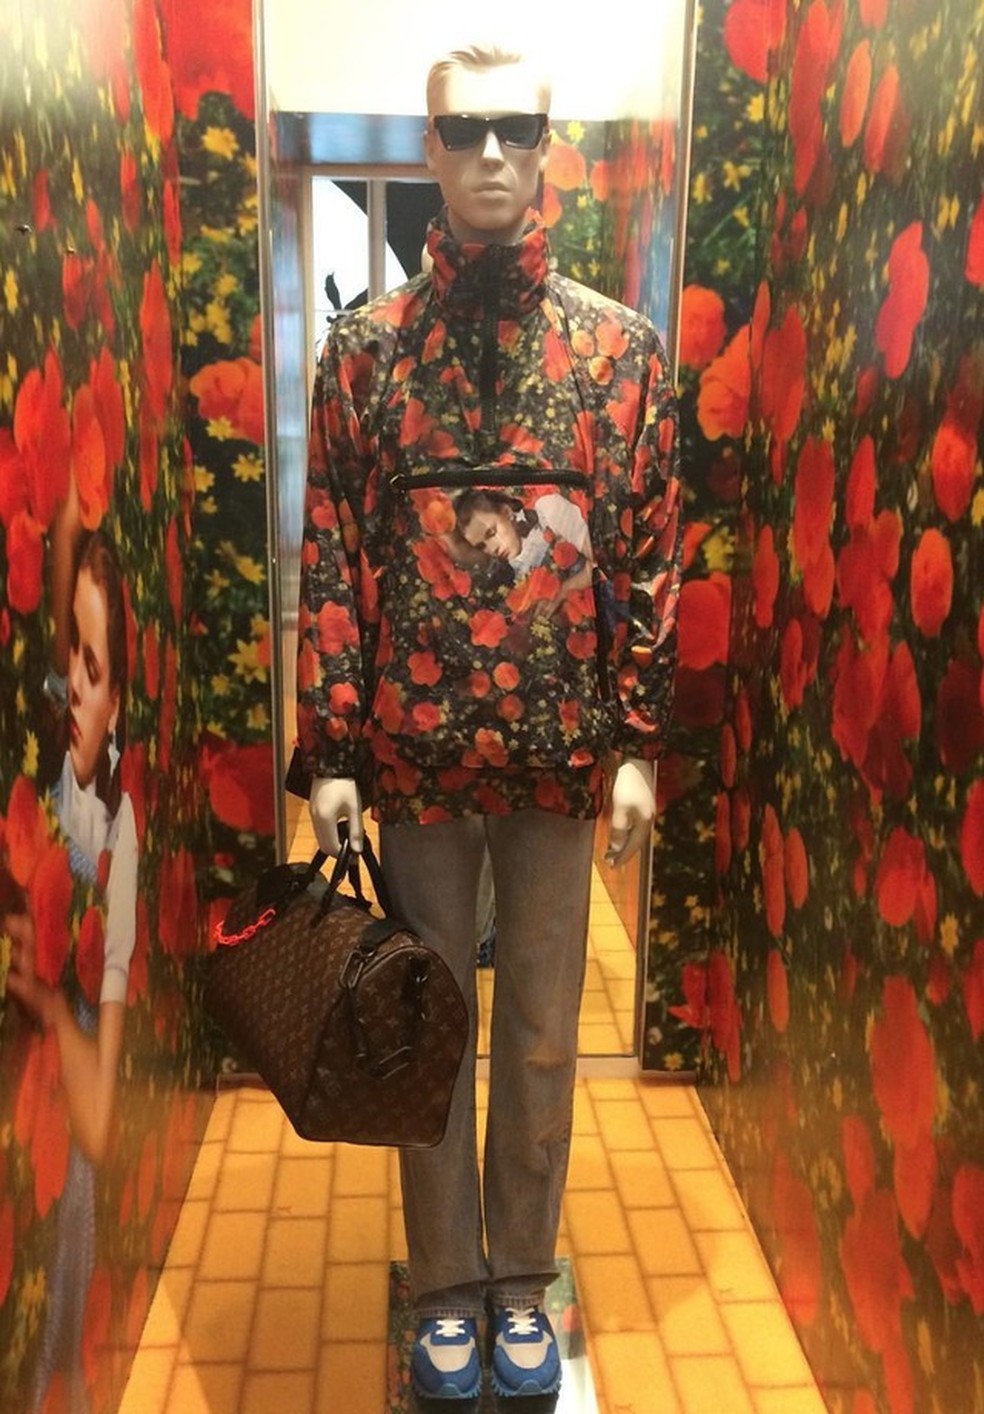 Louis Vuitton Poppies Dorothy Shirt